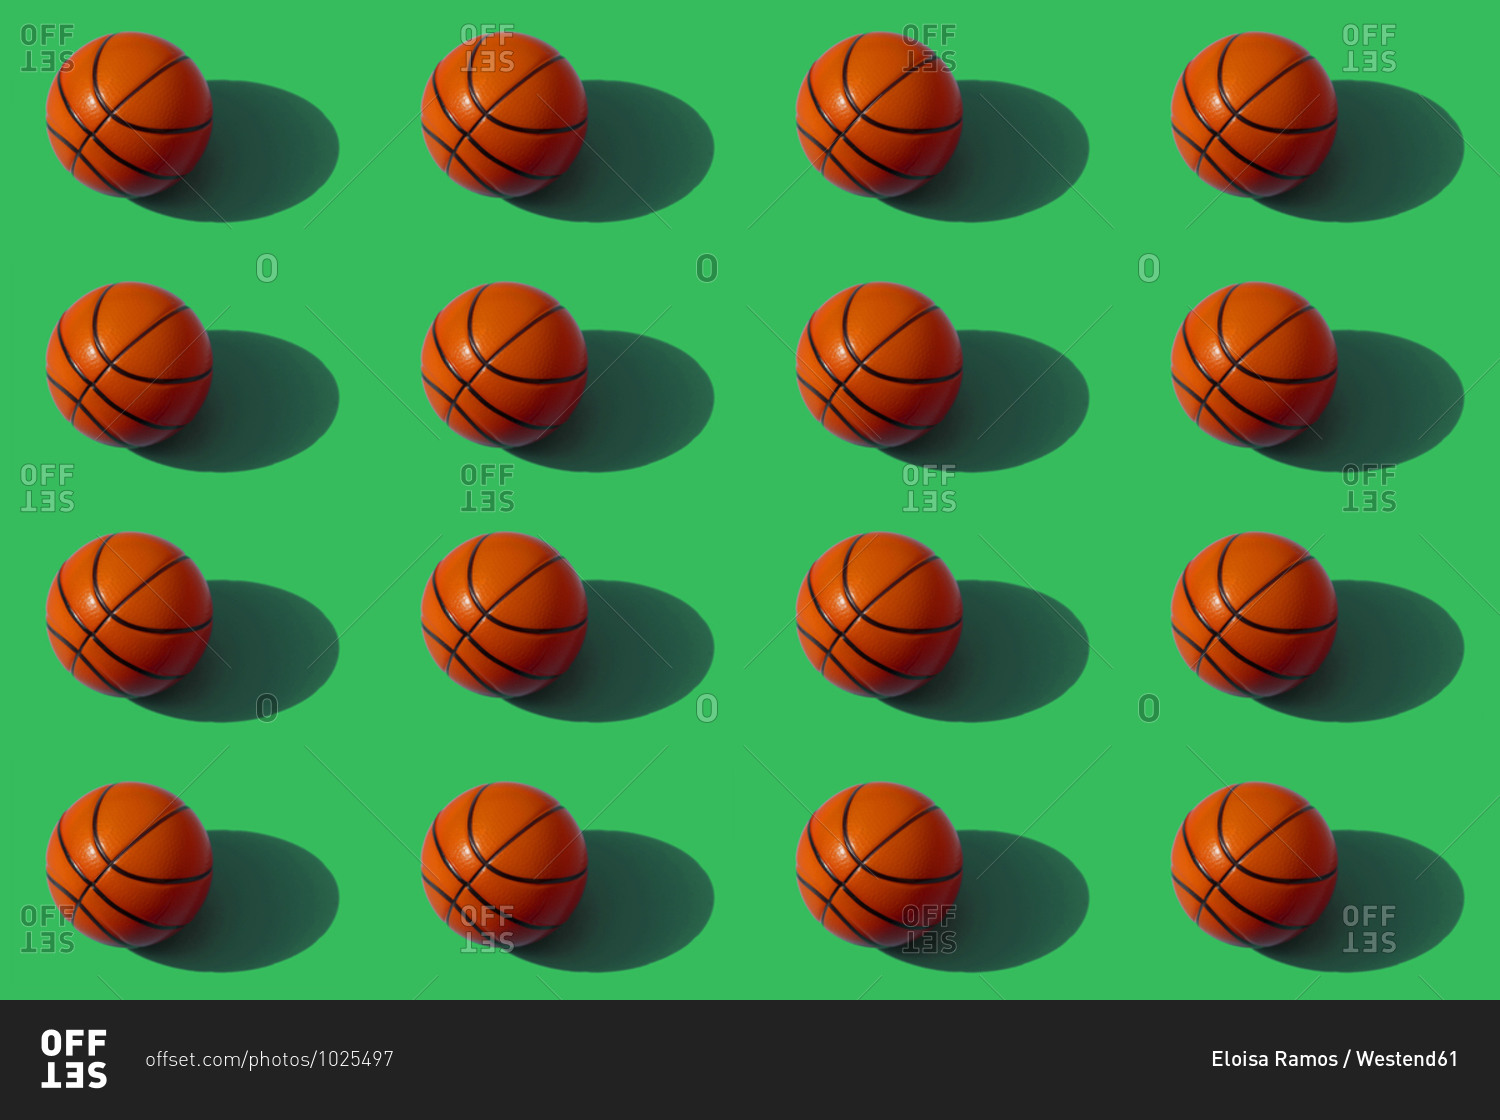 Pattern of basketballs against green background